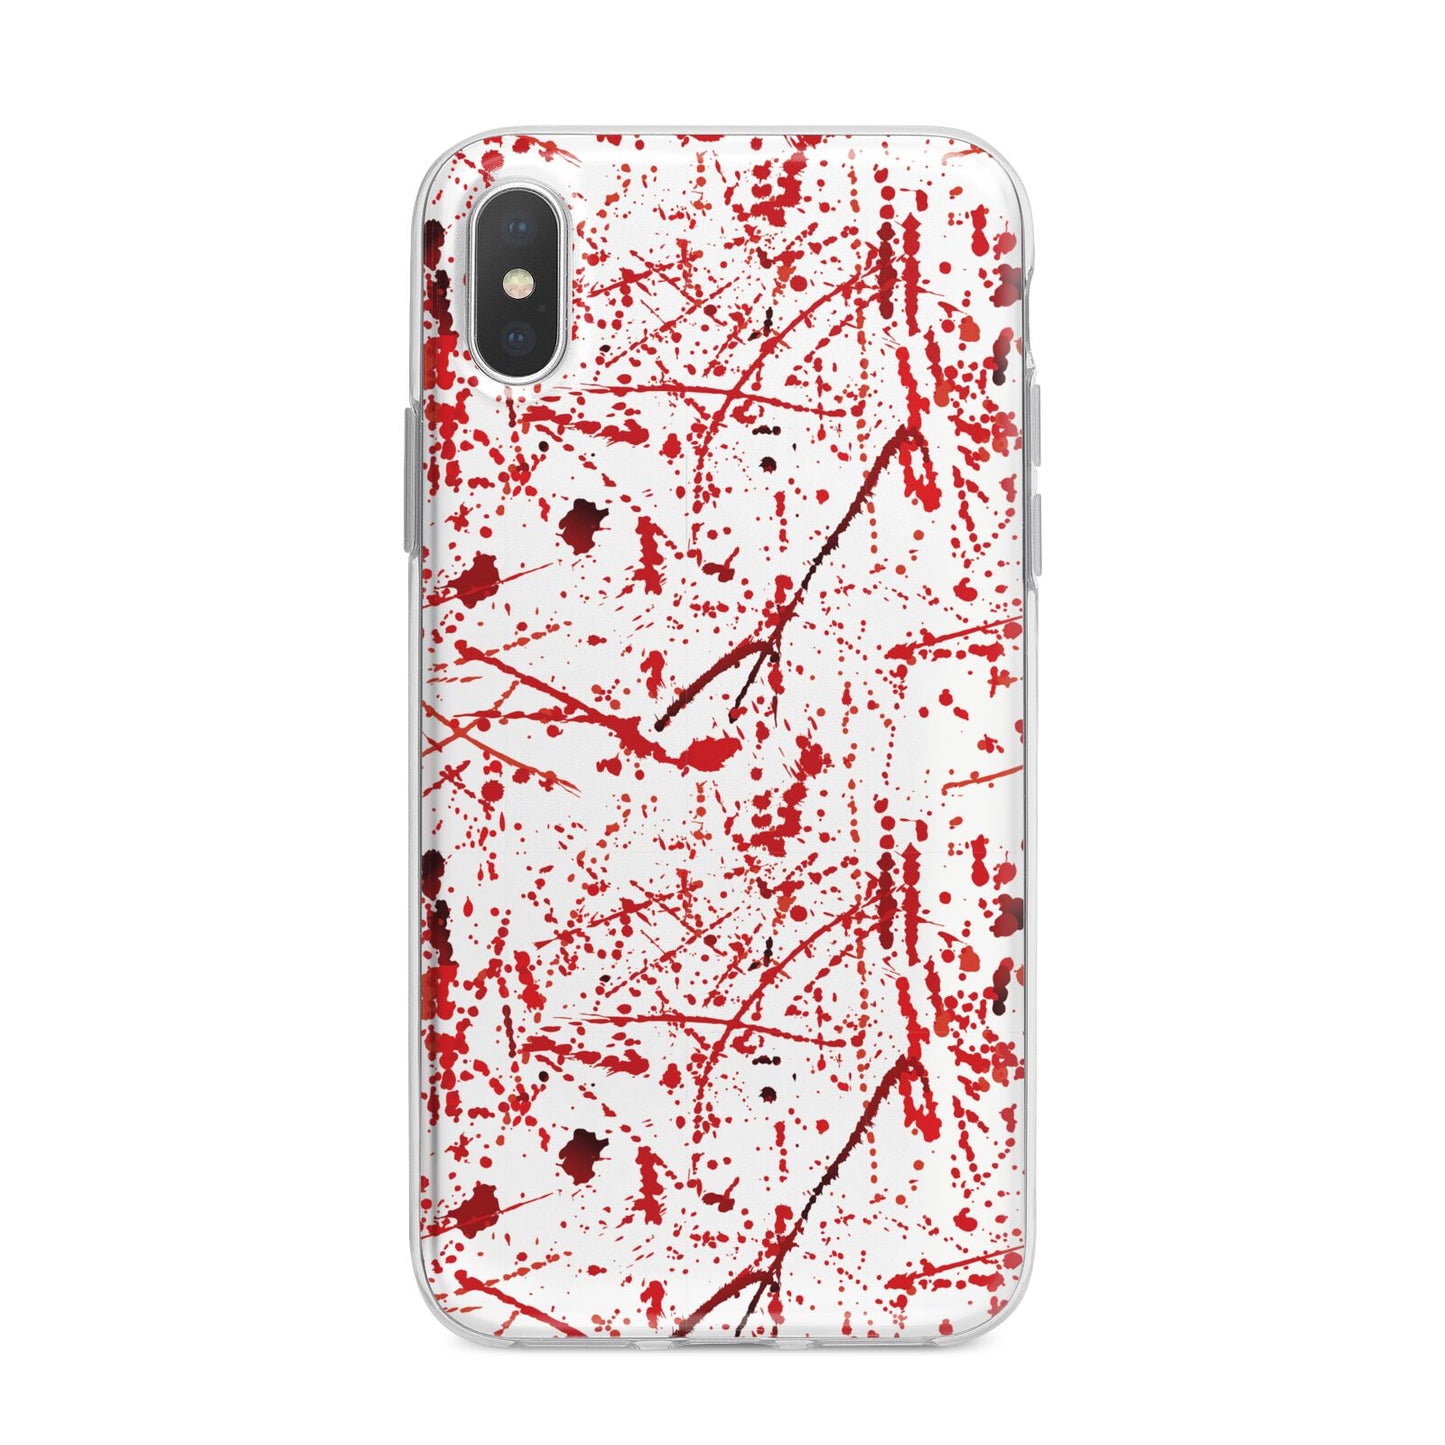 Blood Splatter iPhone X Bumper Case on Silver iPhone Alternative Image 1